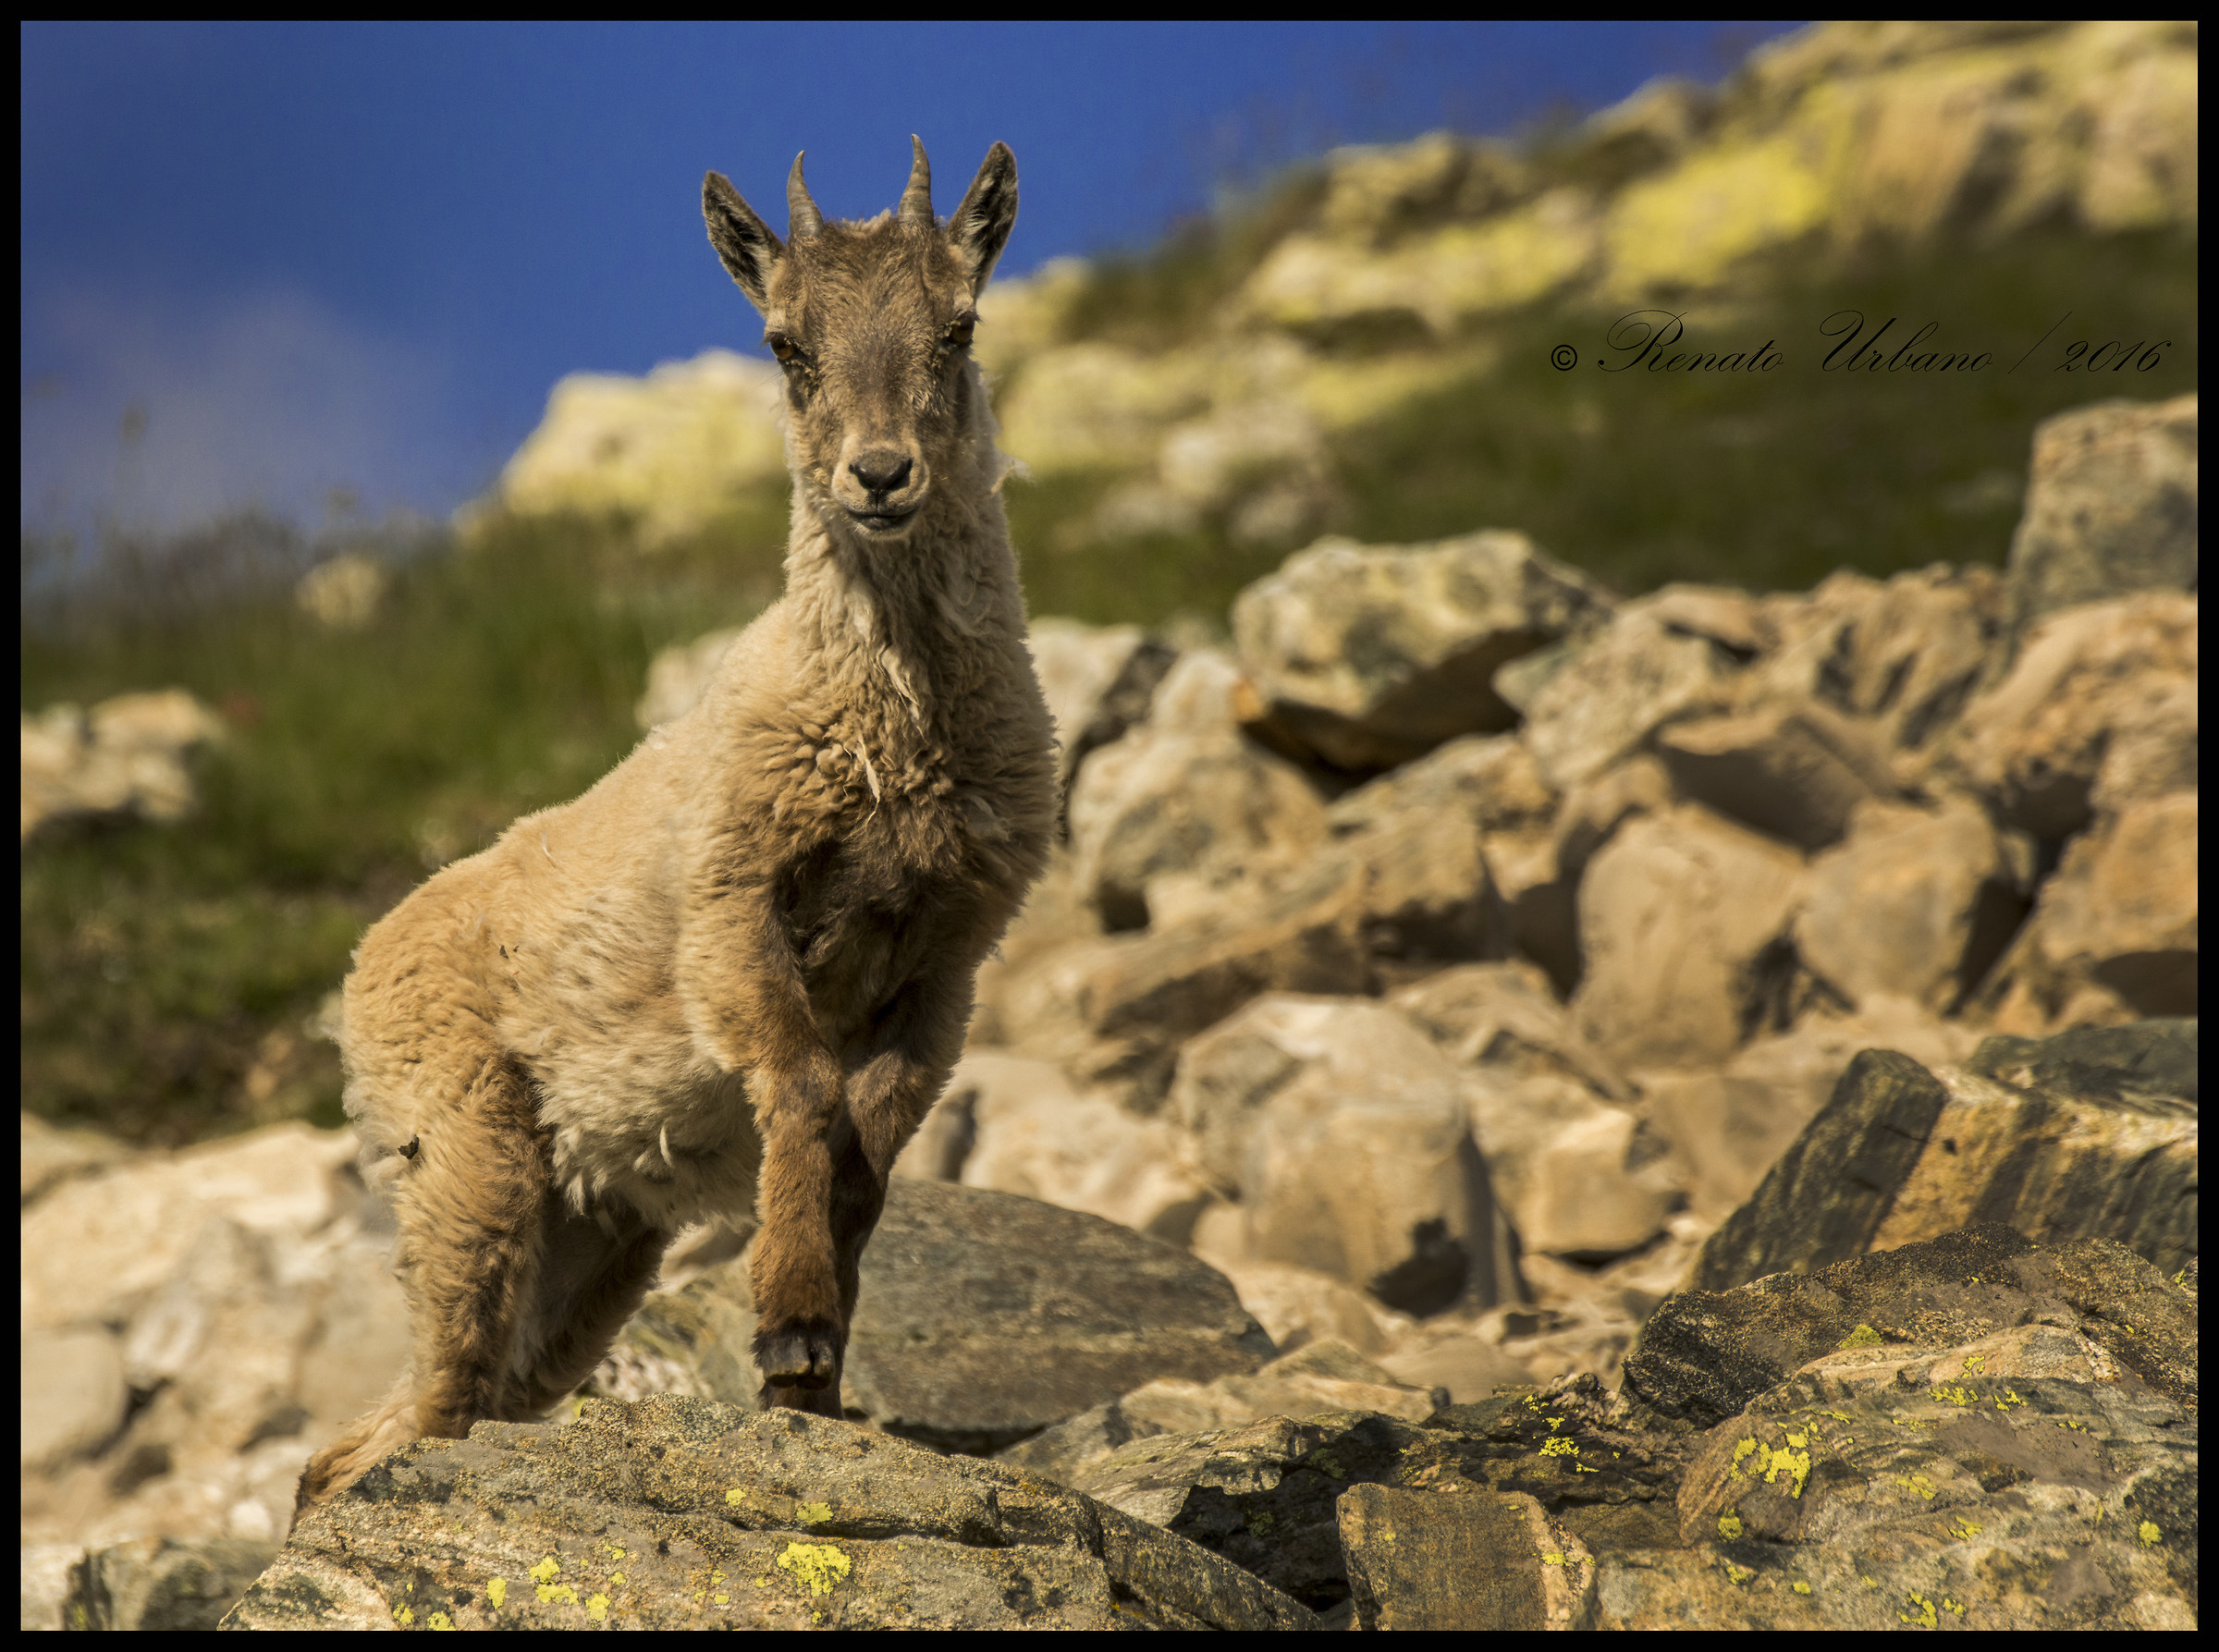 Little curious ibex...